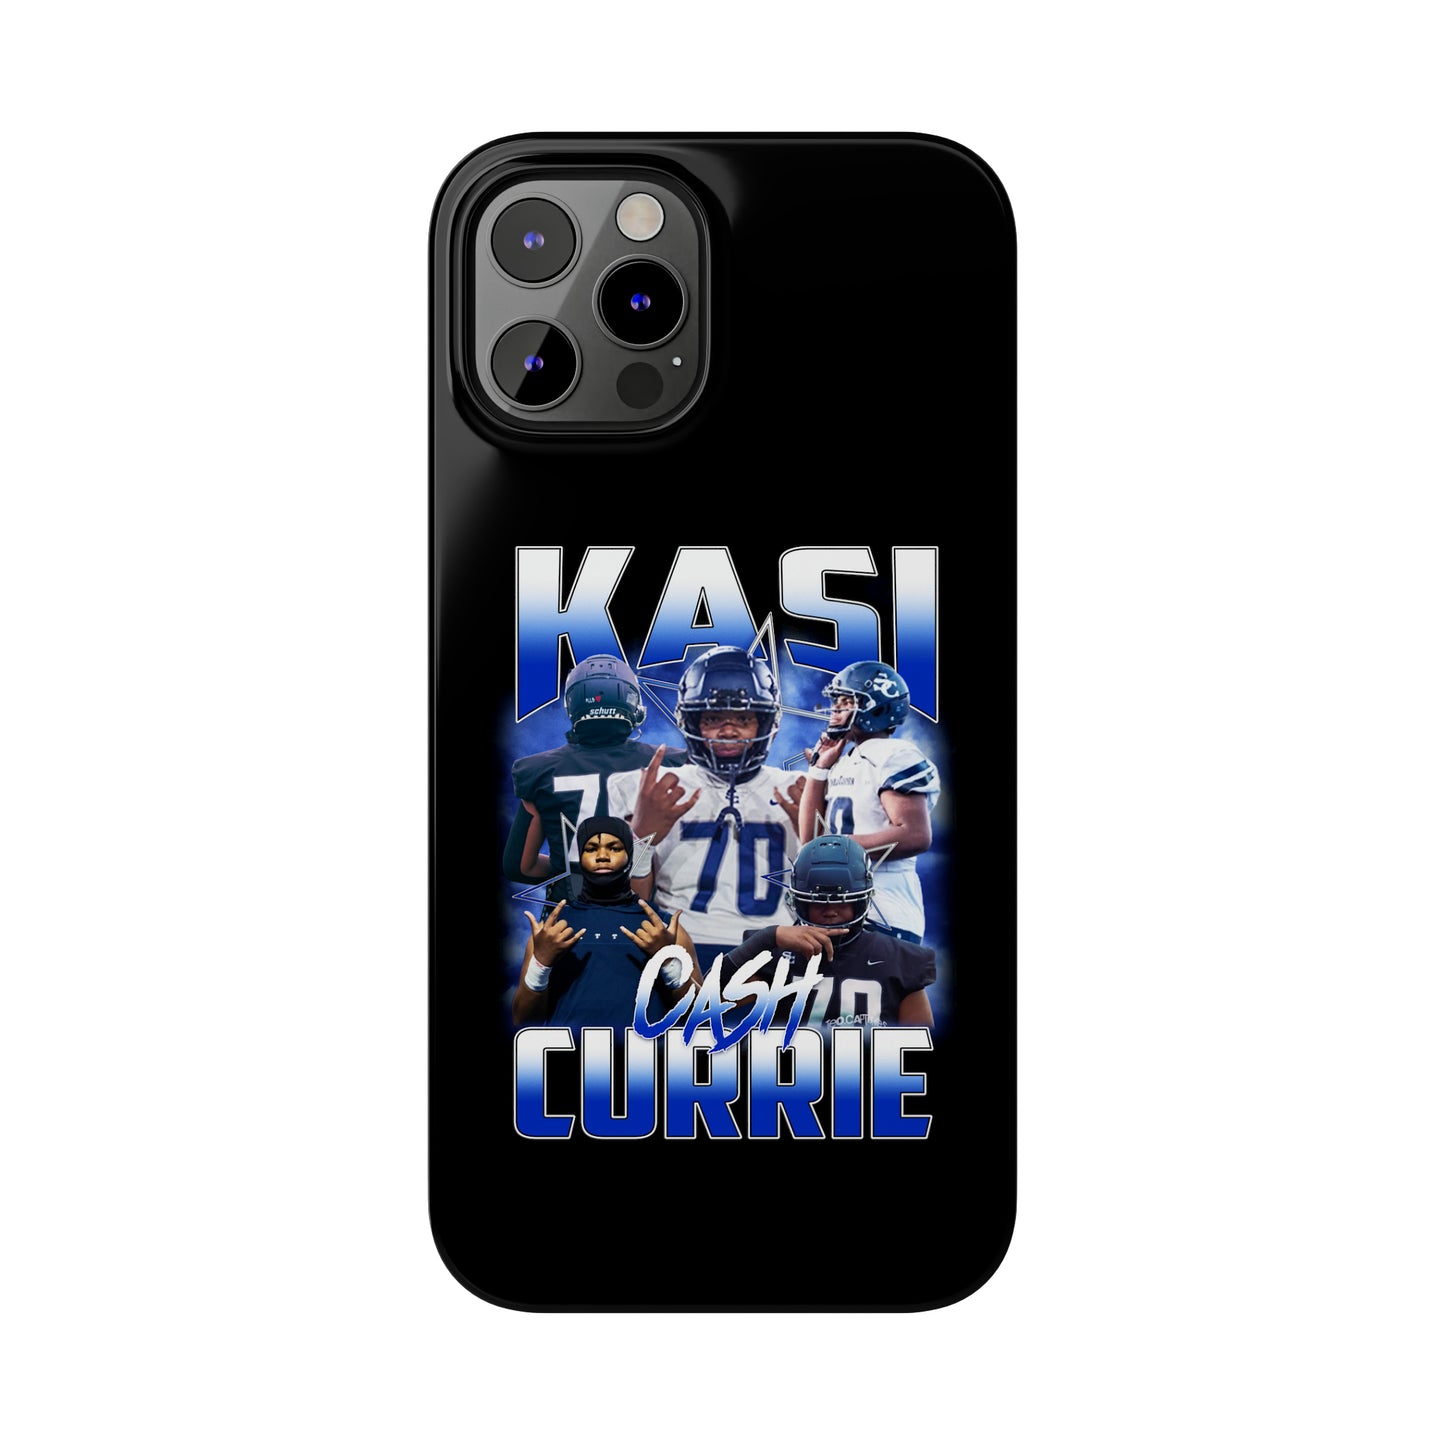 Kasi Currie Phone Case